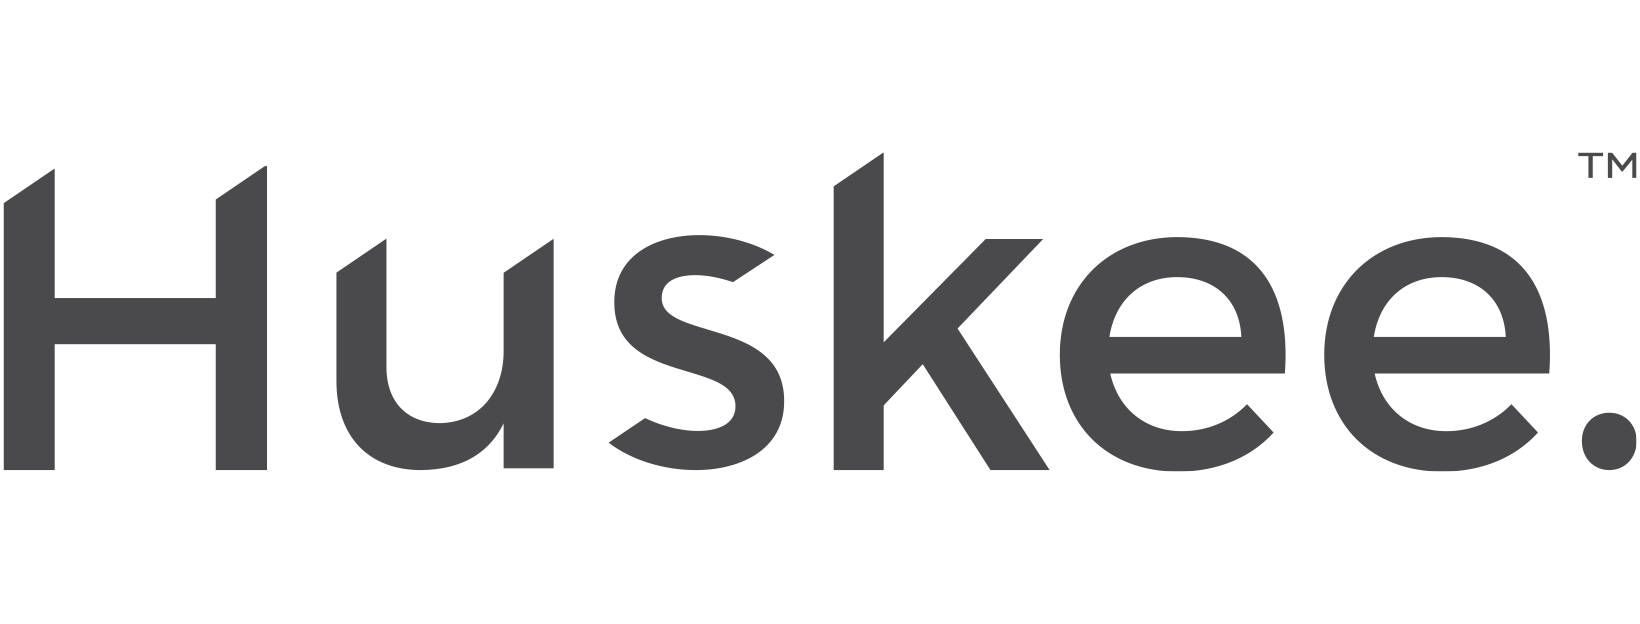 Huskee UK Knowledge Centre logo